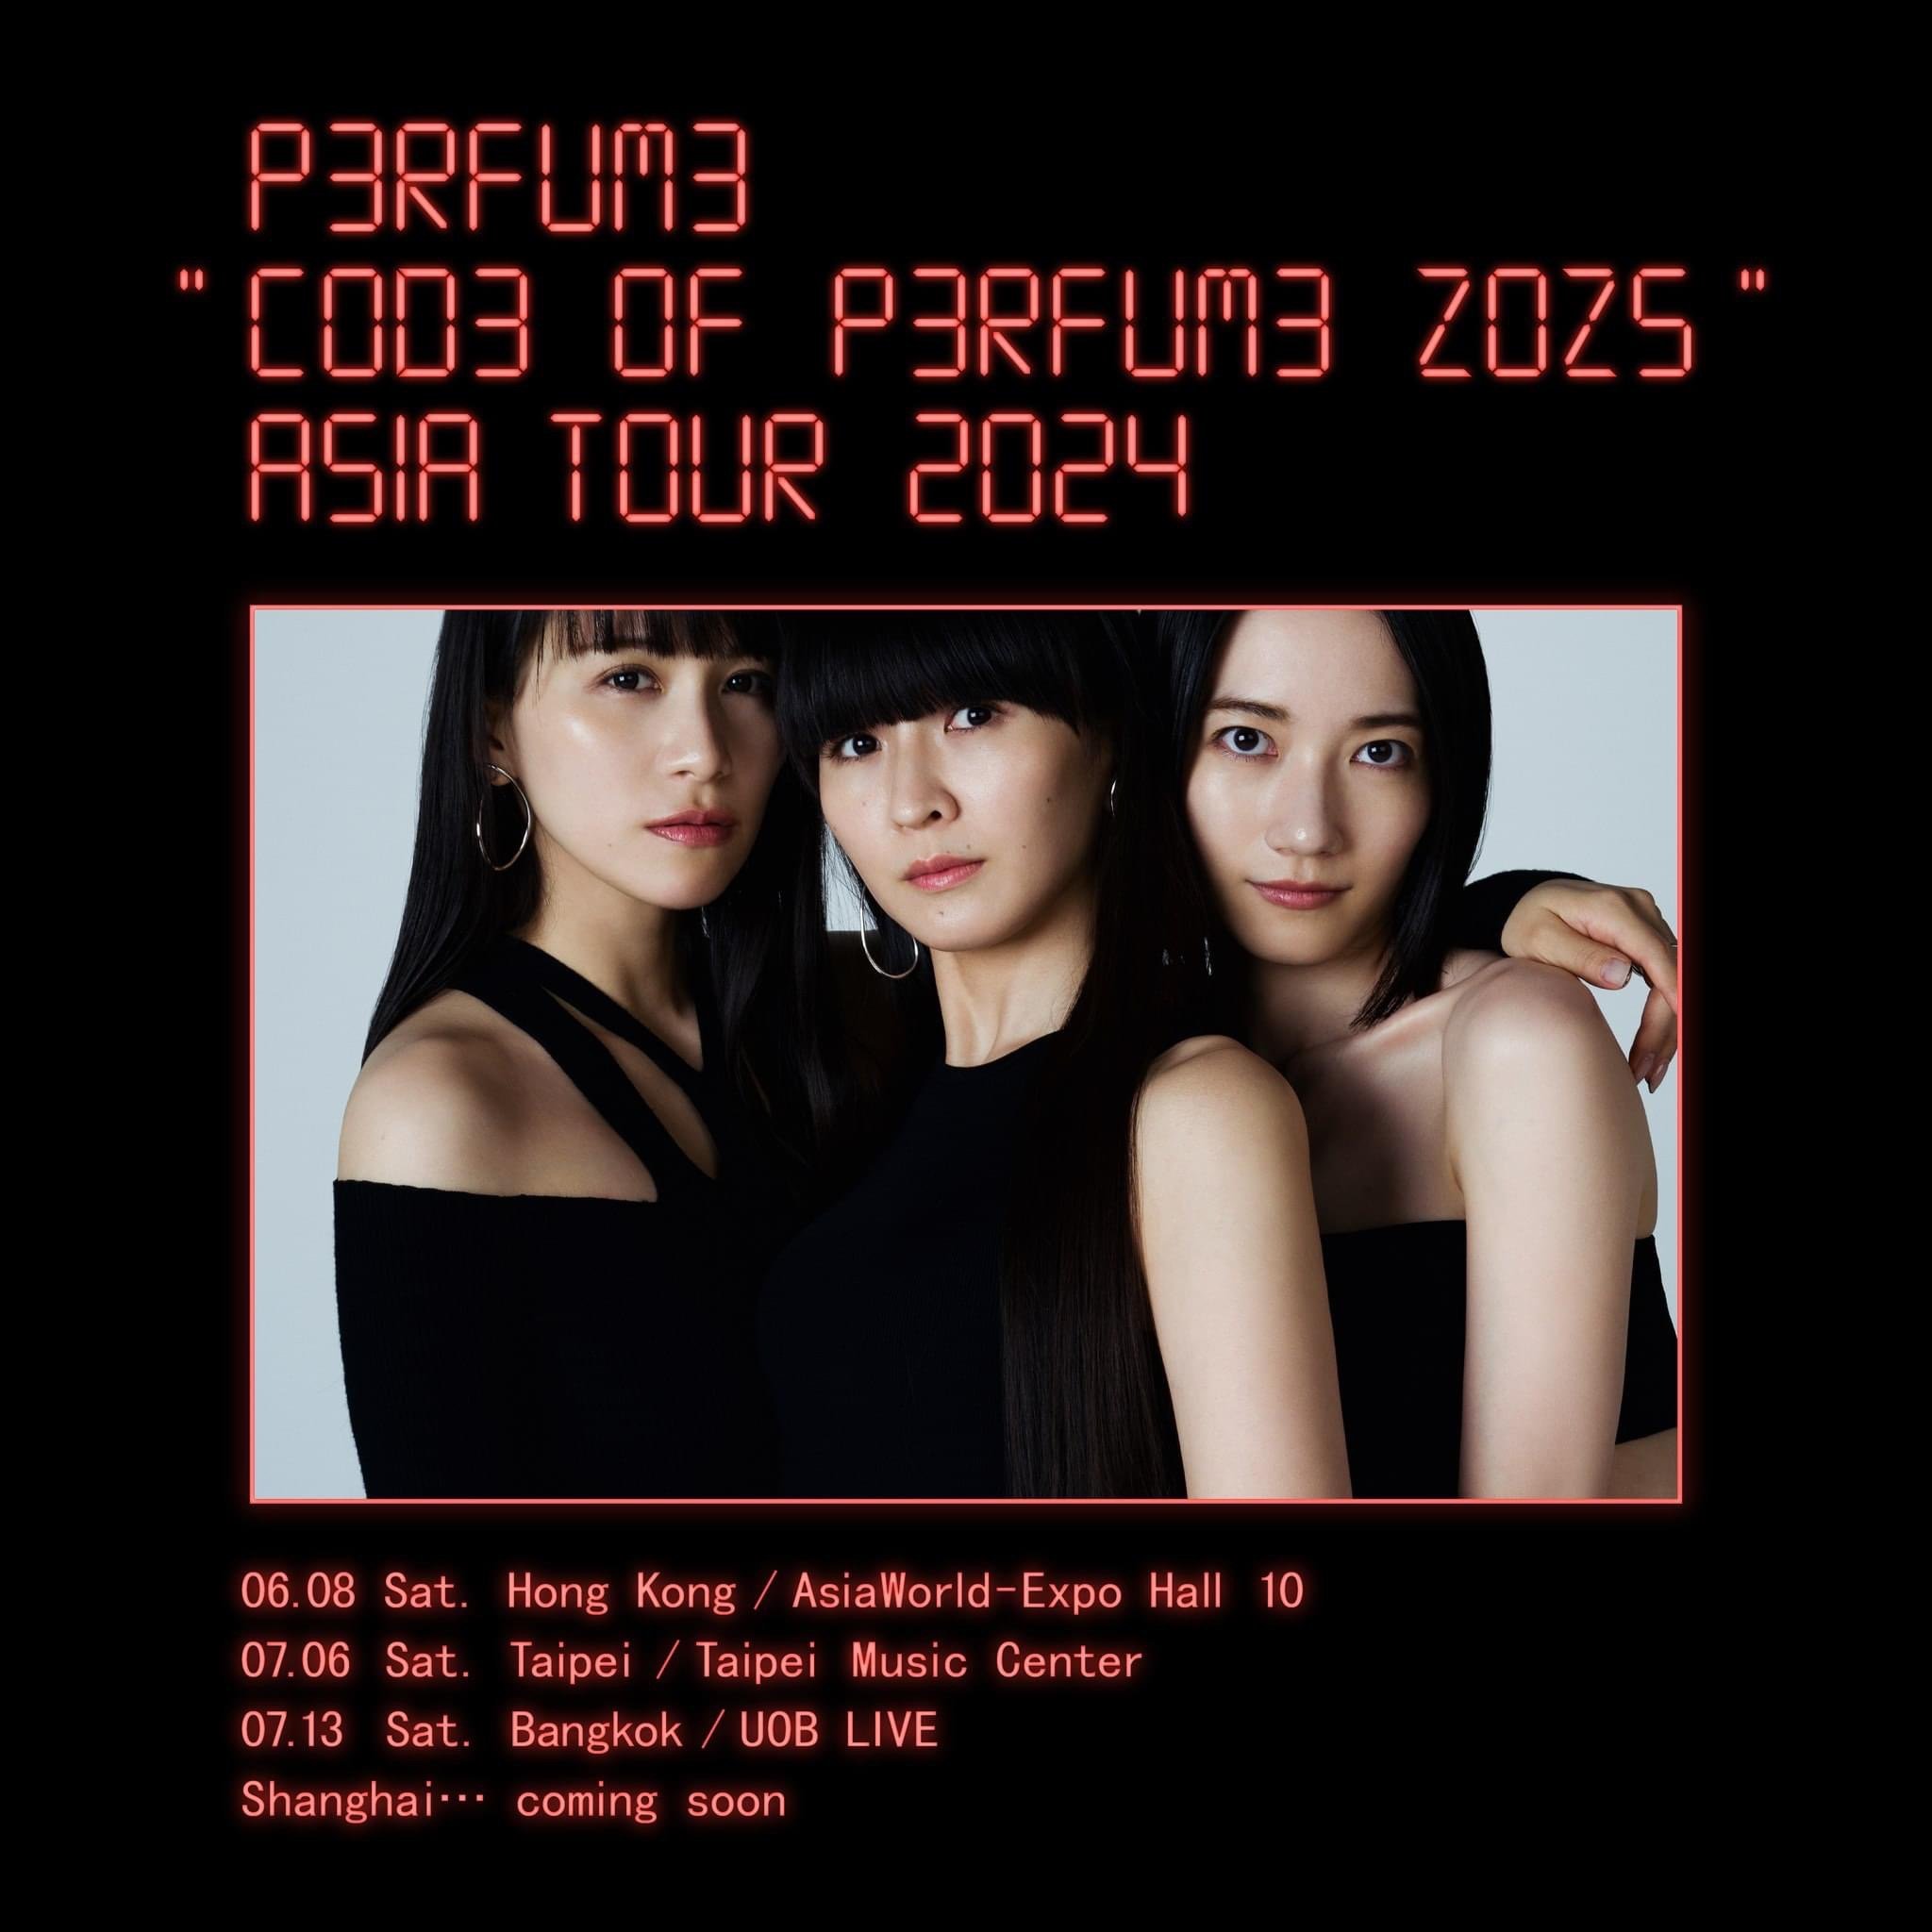 Perfume演唱會台北站2024：《Perfume 「COD3 OF P3RFUM3 ZOZ5」 Asia Tour 2024 - Taipei》